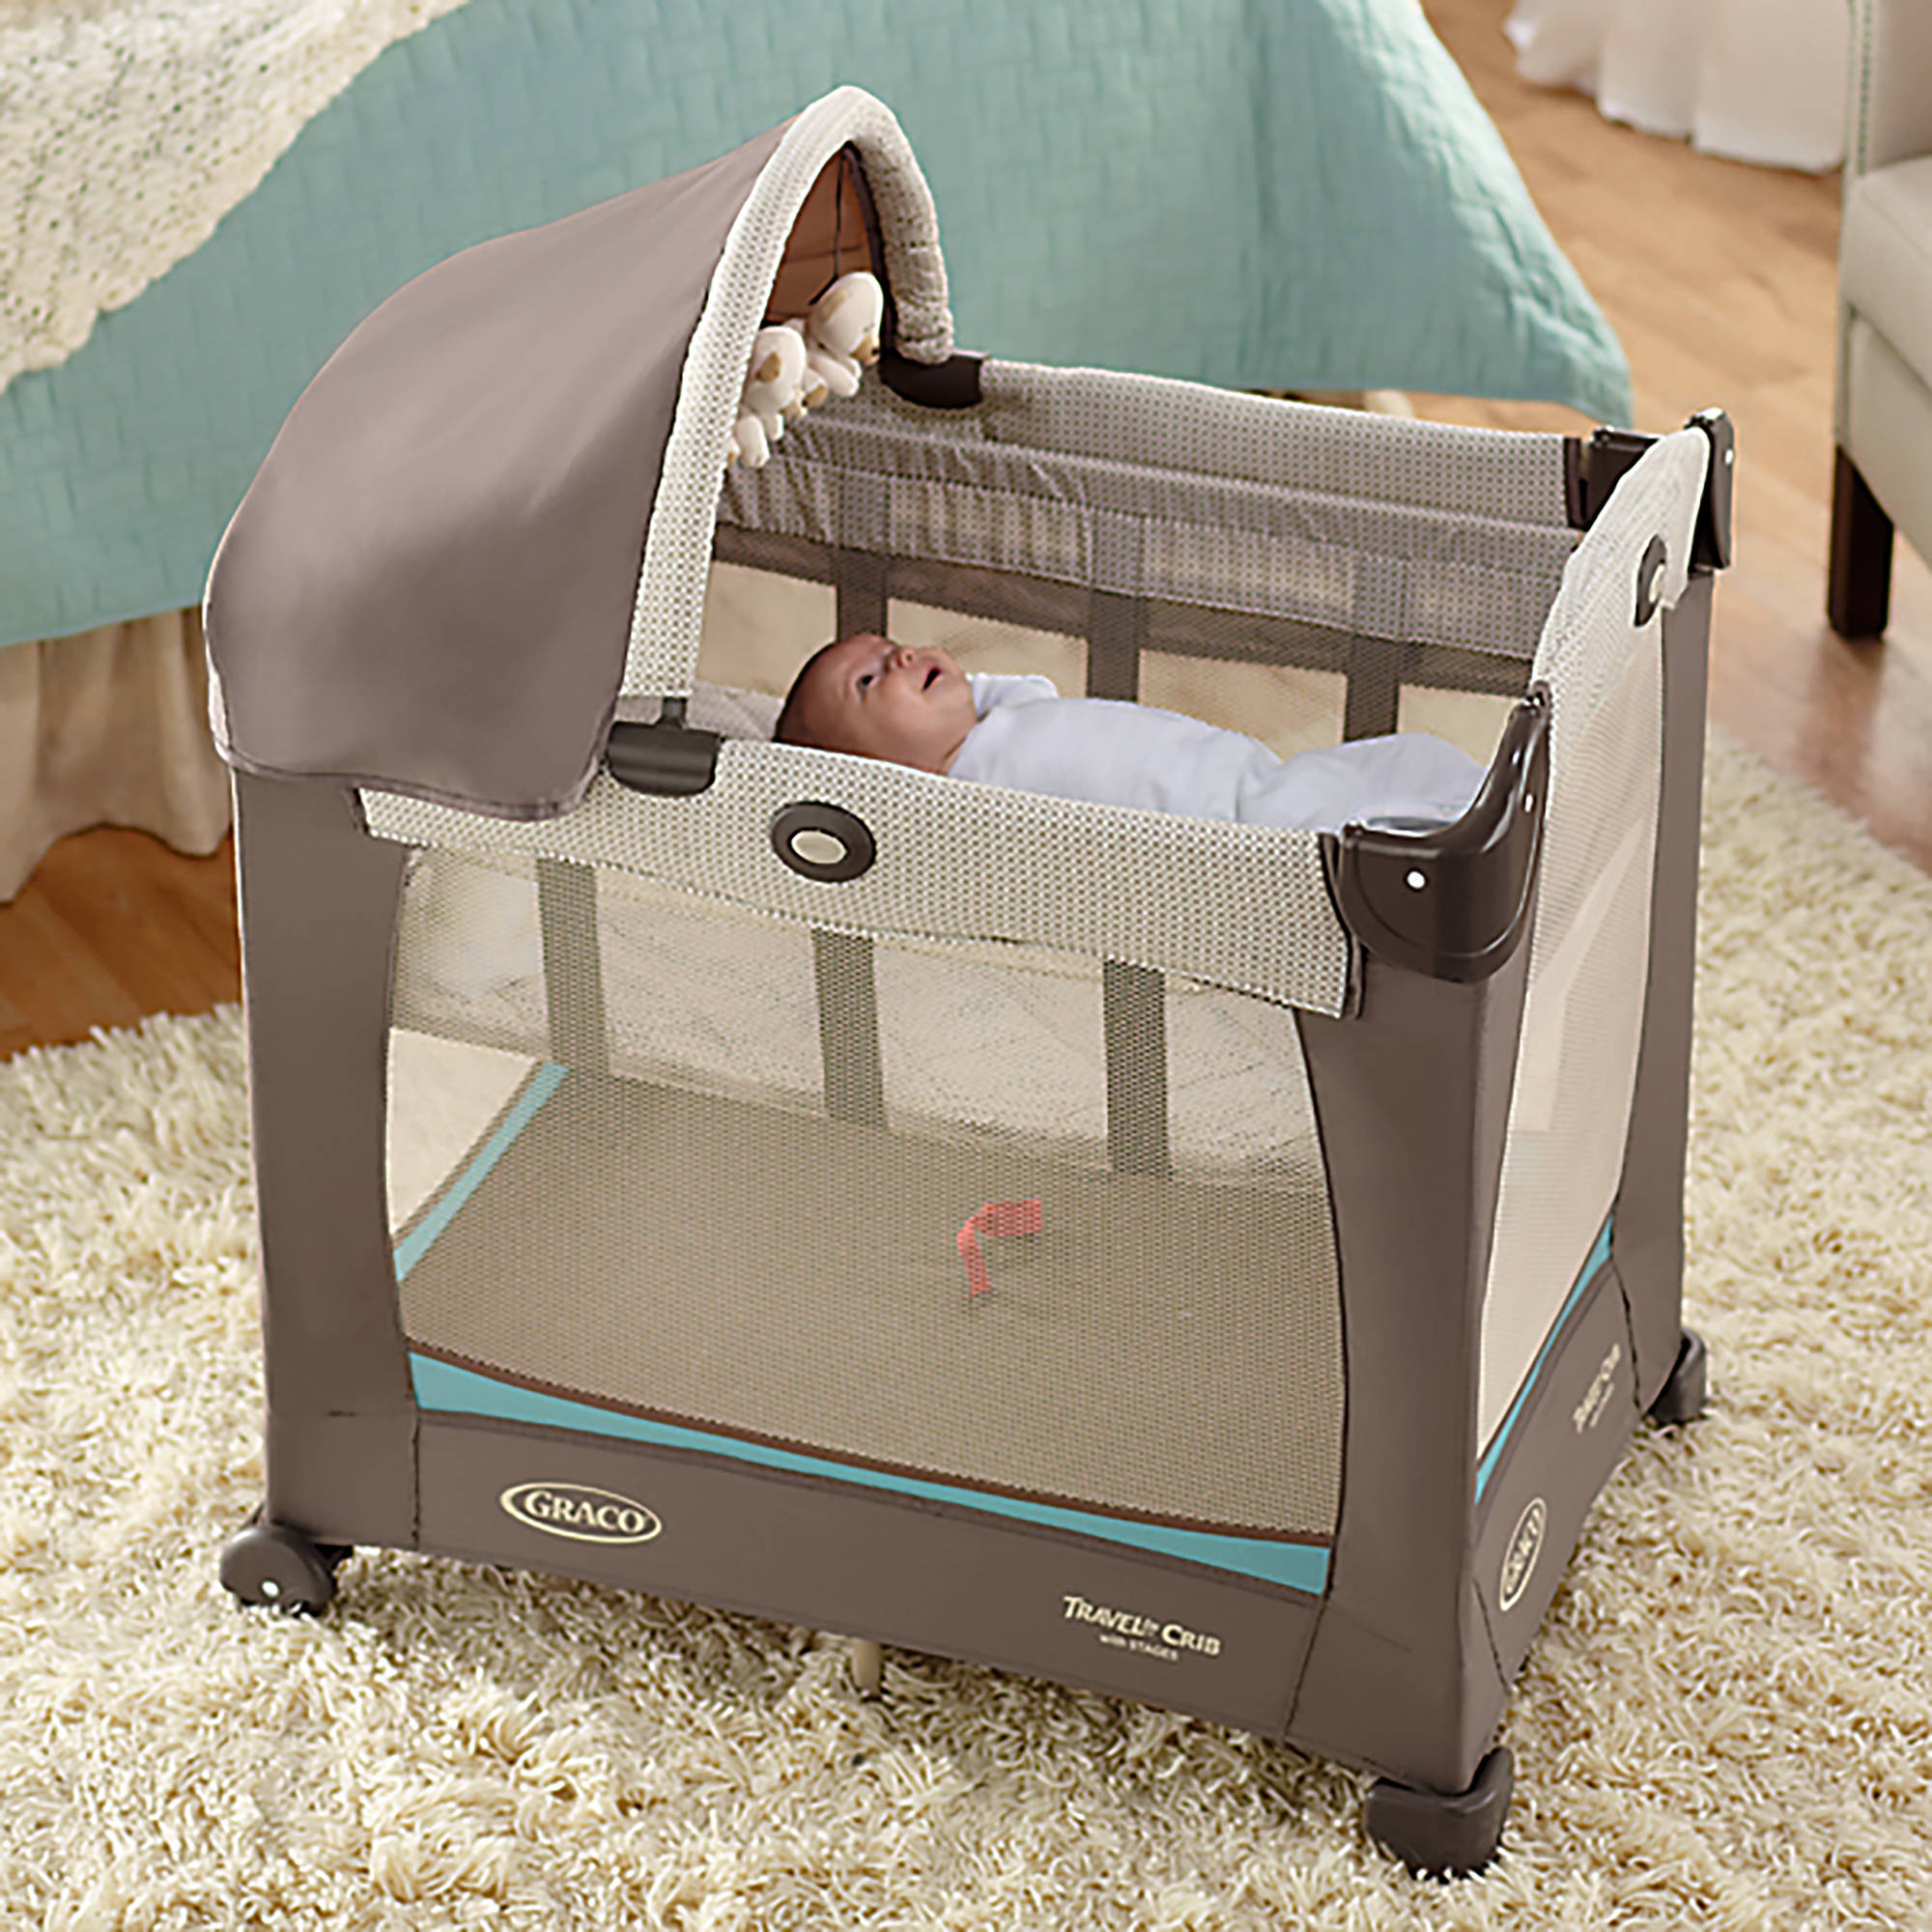 graco portable baby bed